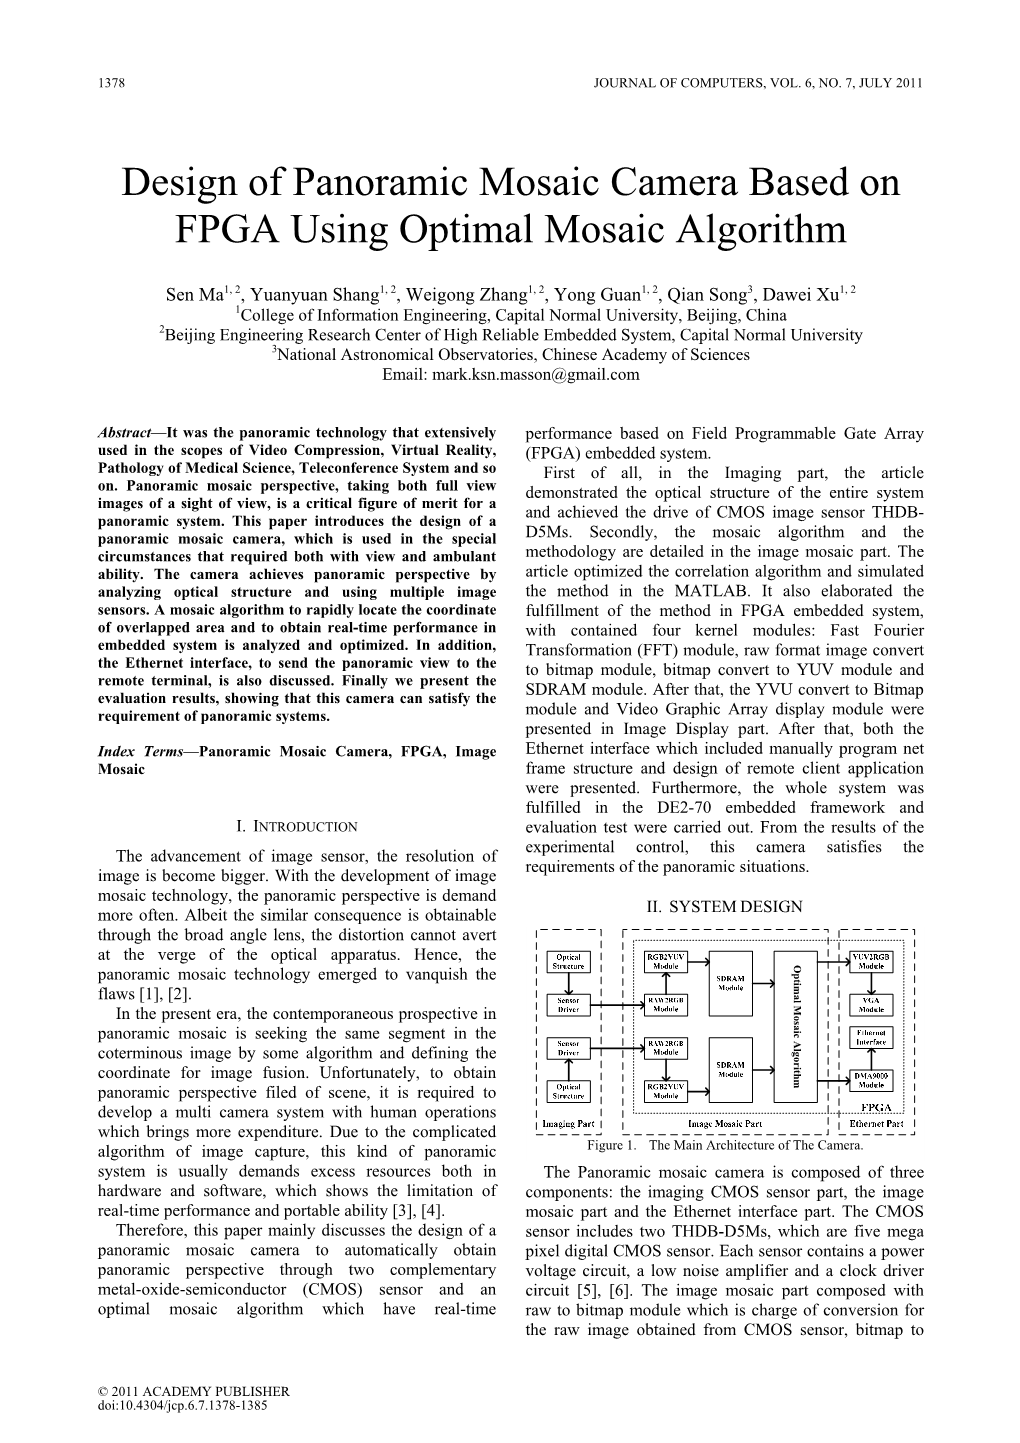 Design of Panoramic Mosaic Camera Based on FPGA Using Optimal Mosaic Algorithm